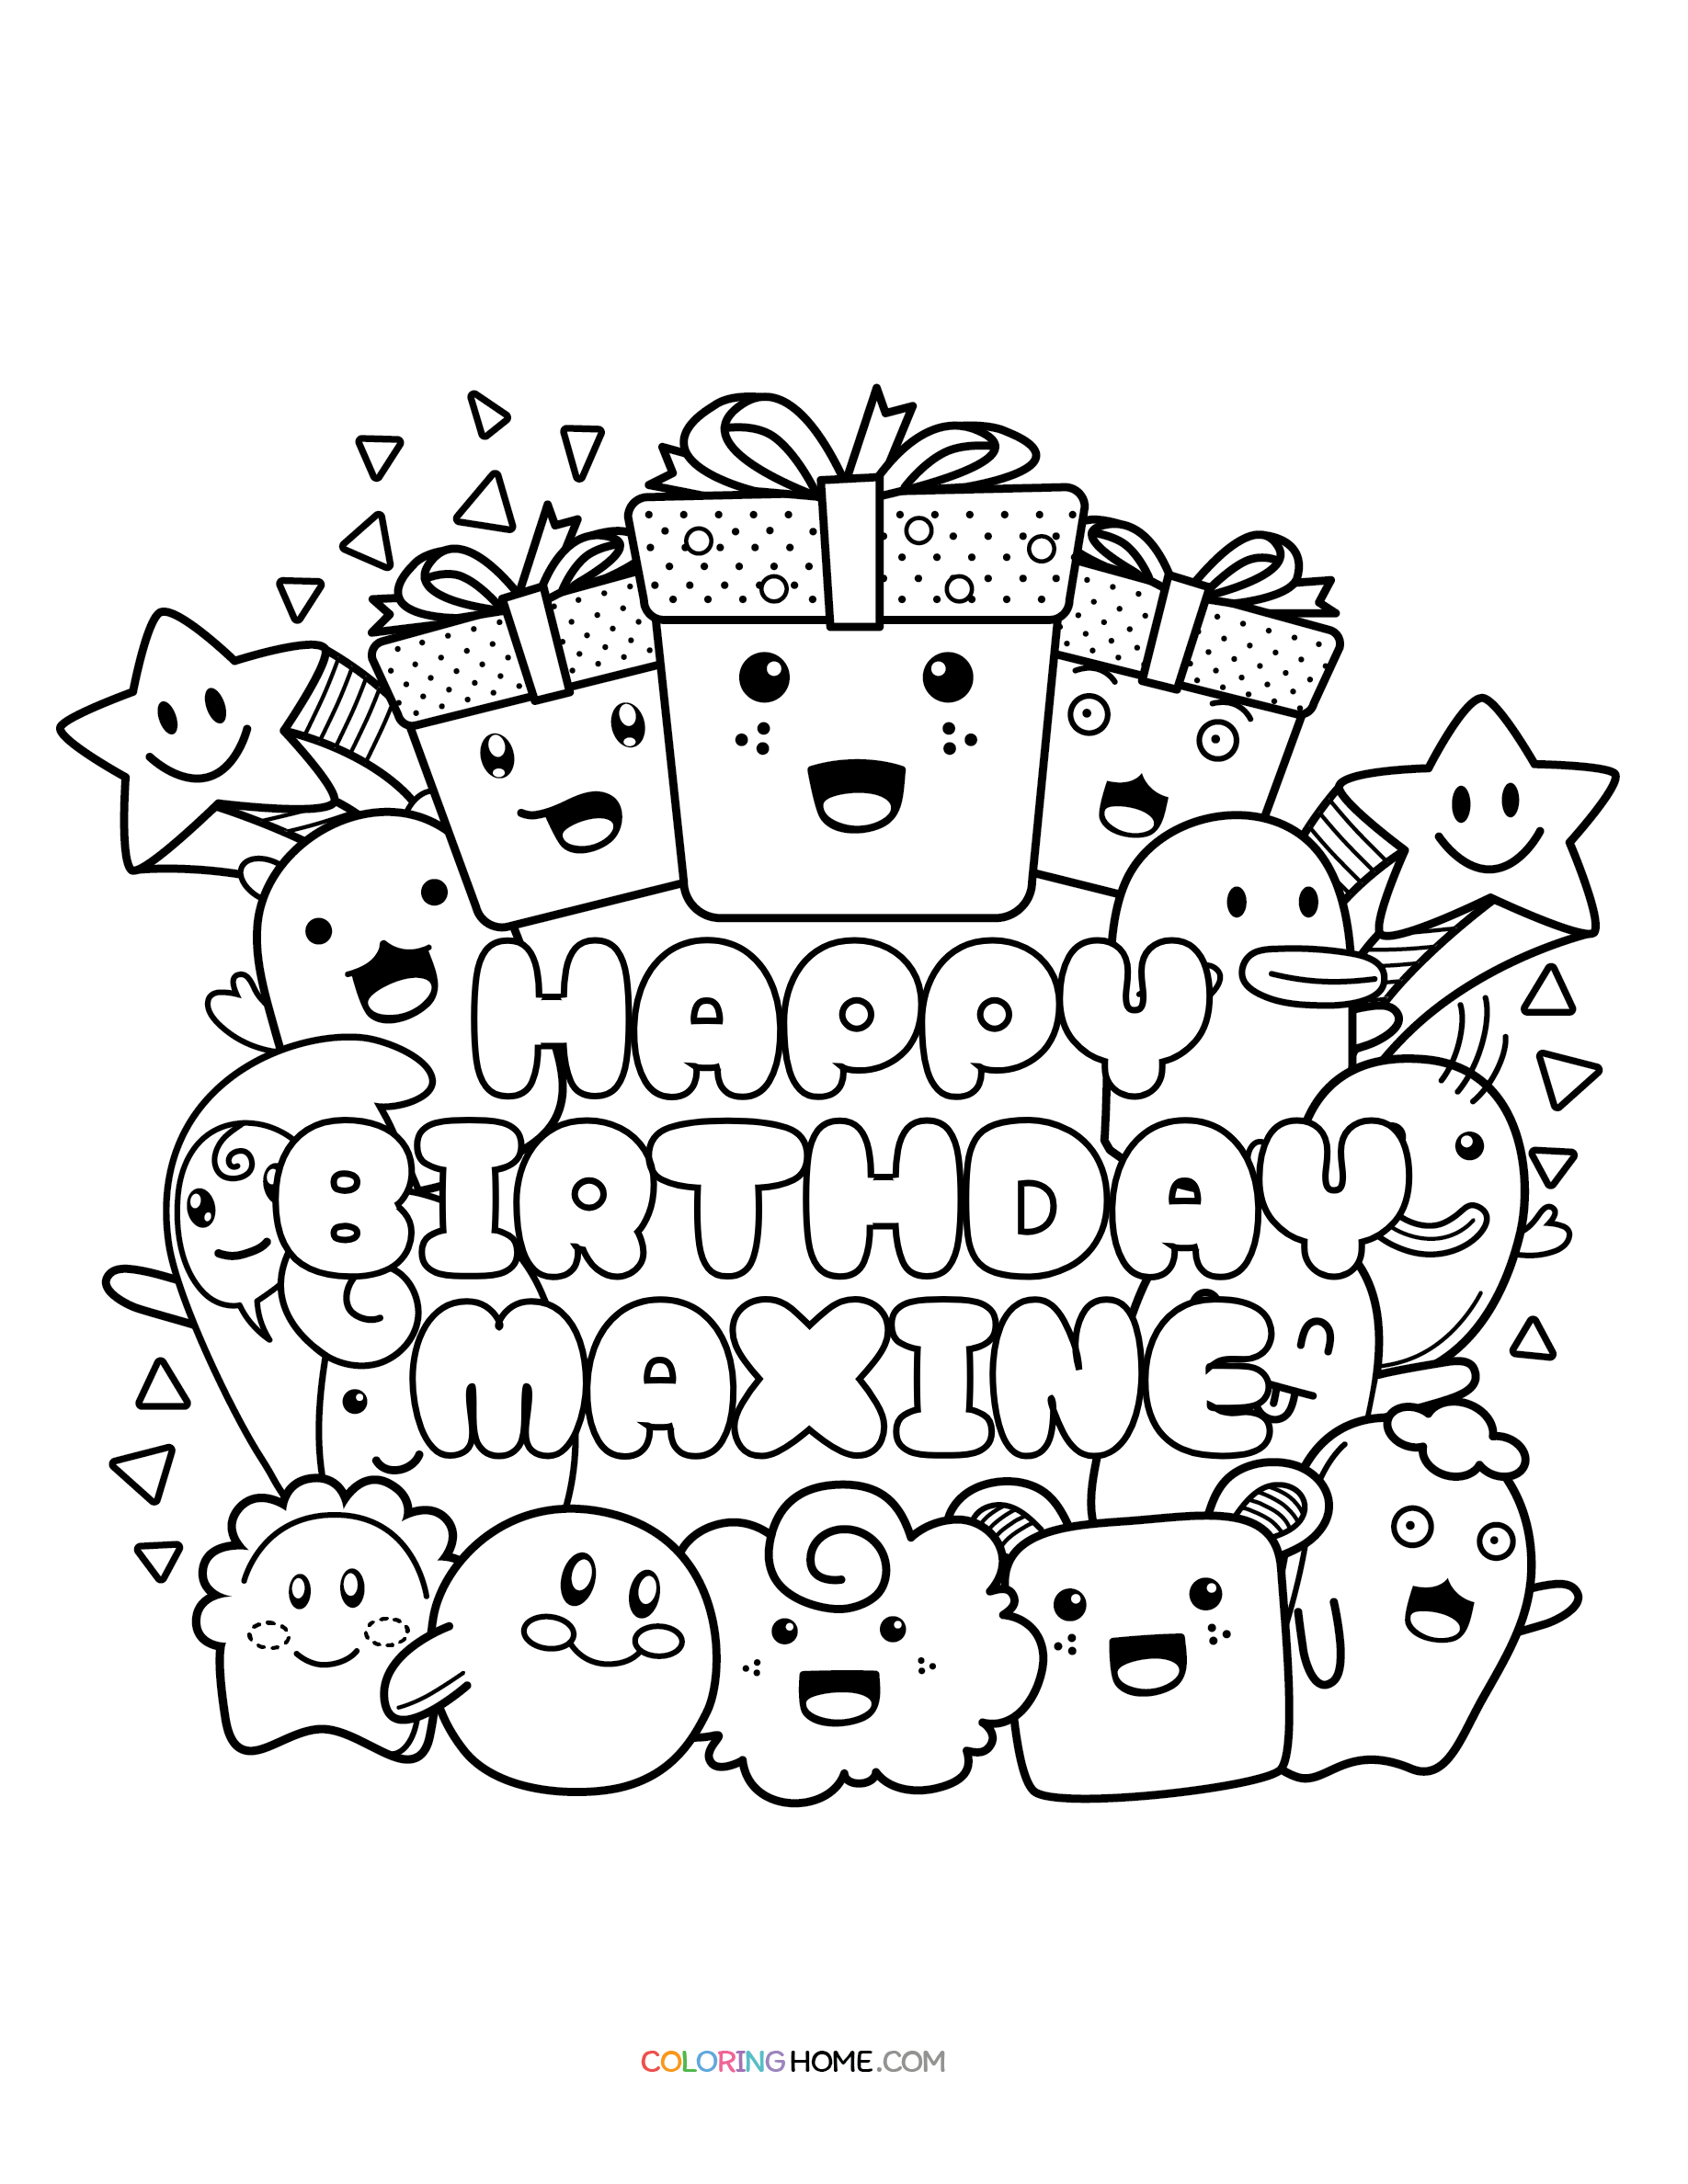 Happy Birthday Maxine coloring page